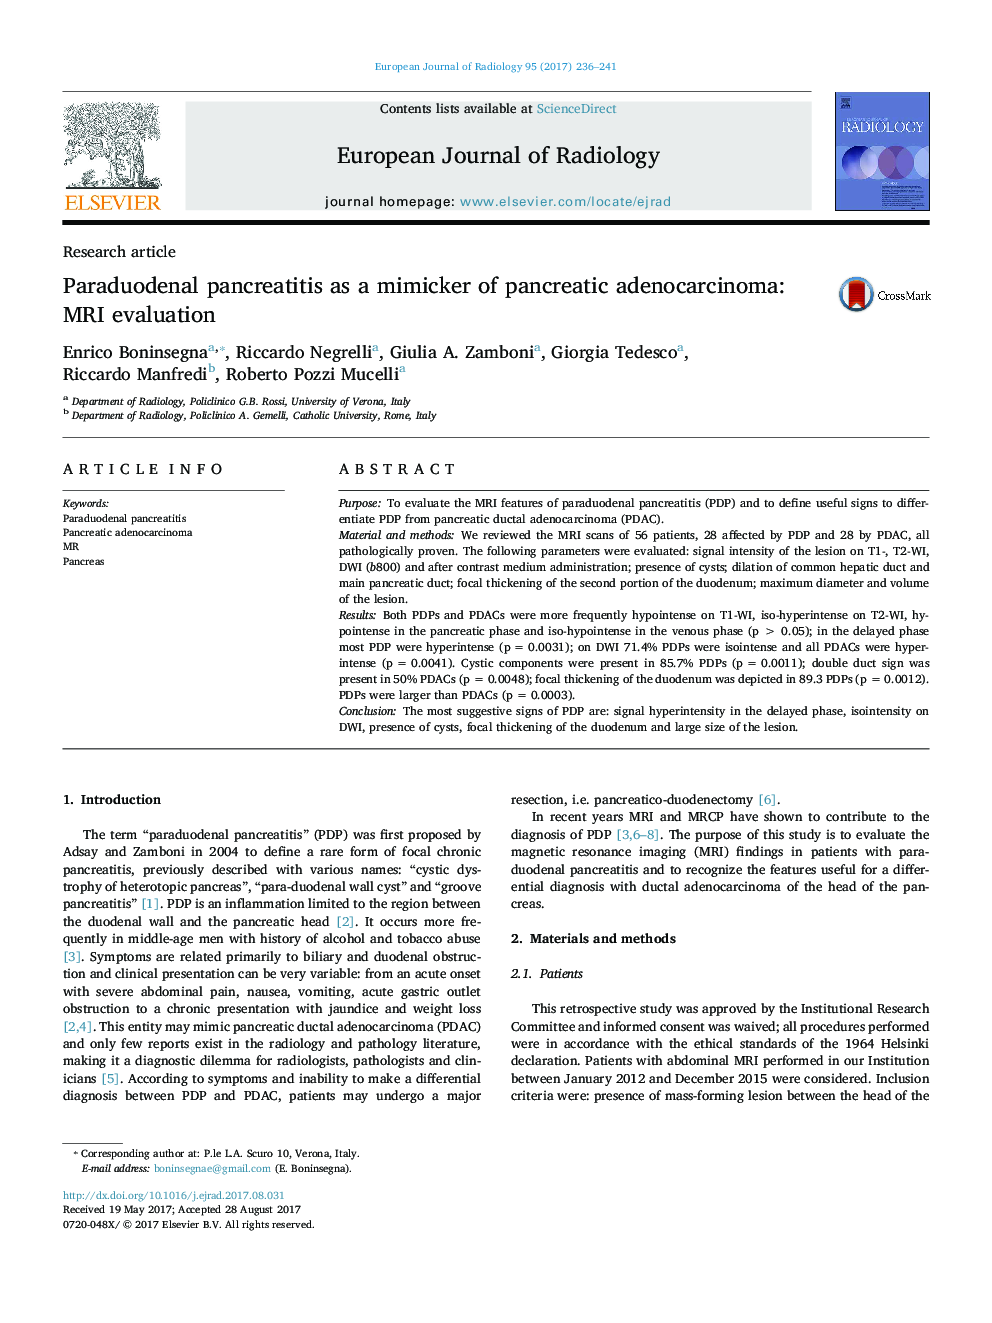 Research articleParaduodenal pancreatitis as a mimicker of pancreatic adenocarcinoma: MRI evaluation